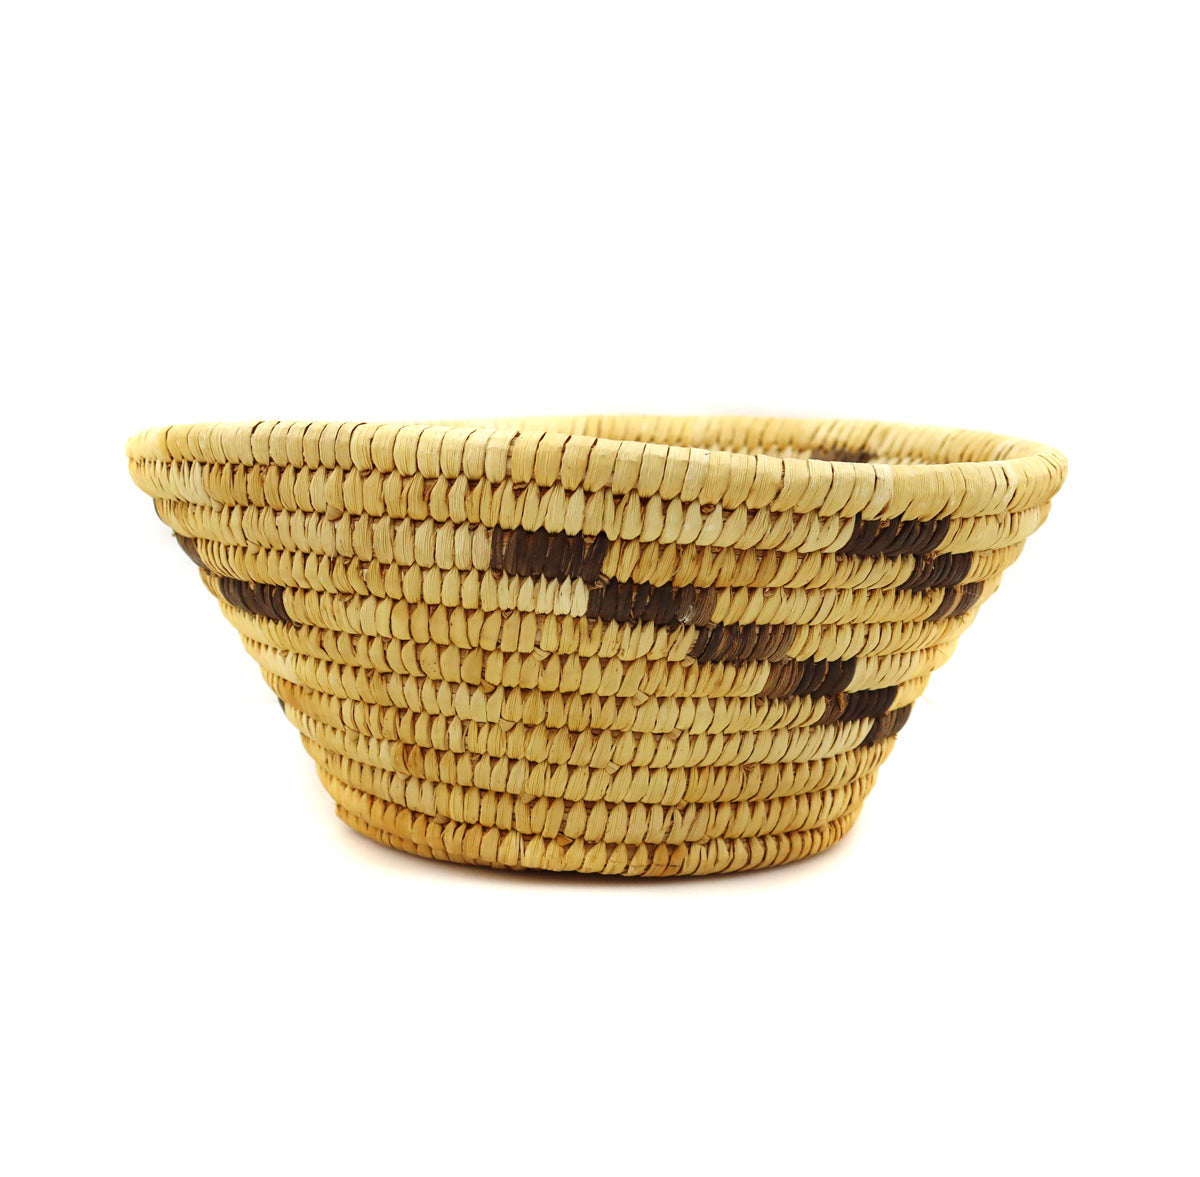 Tohono O'odham Basket c. 1940s, 3.75" x 7.75" (SK90803-0721-003) 2
